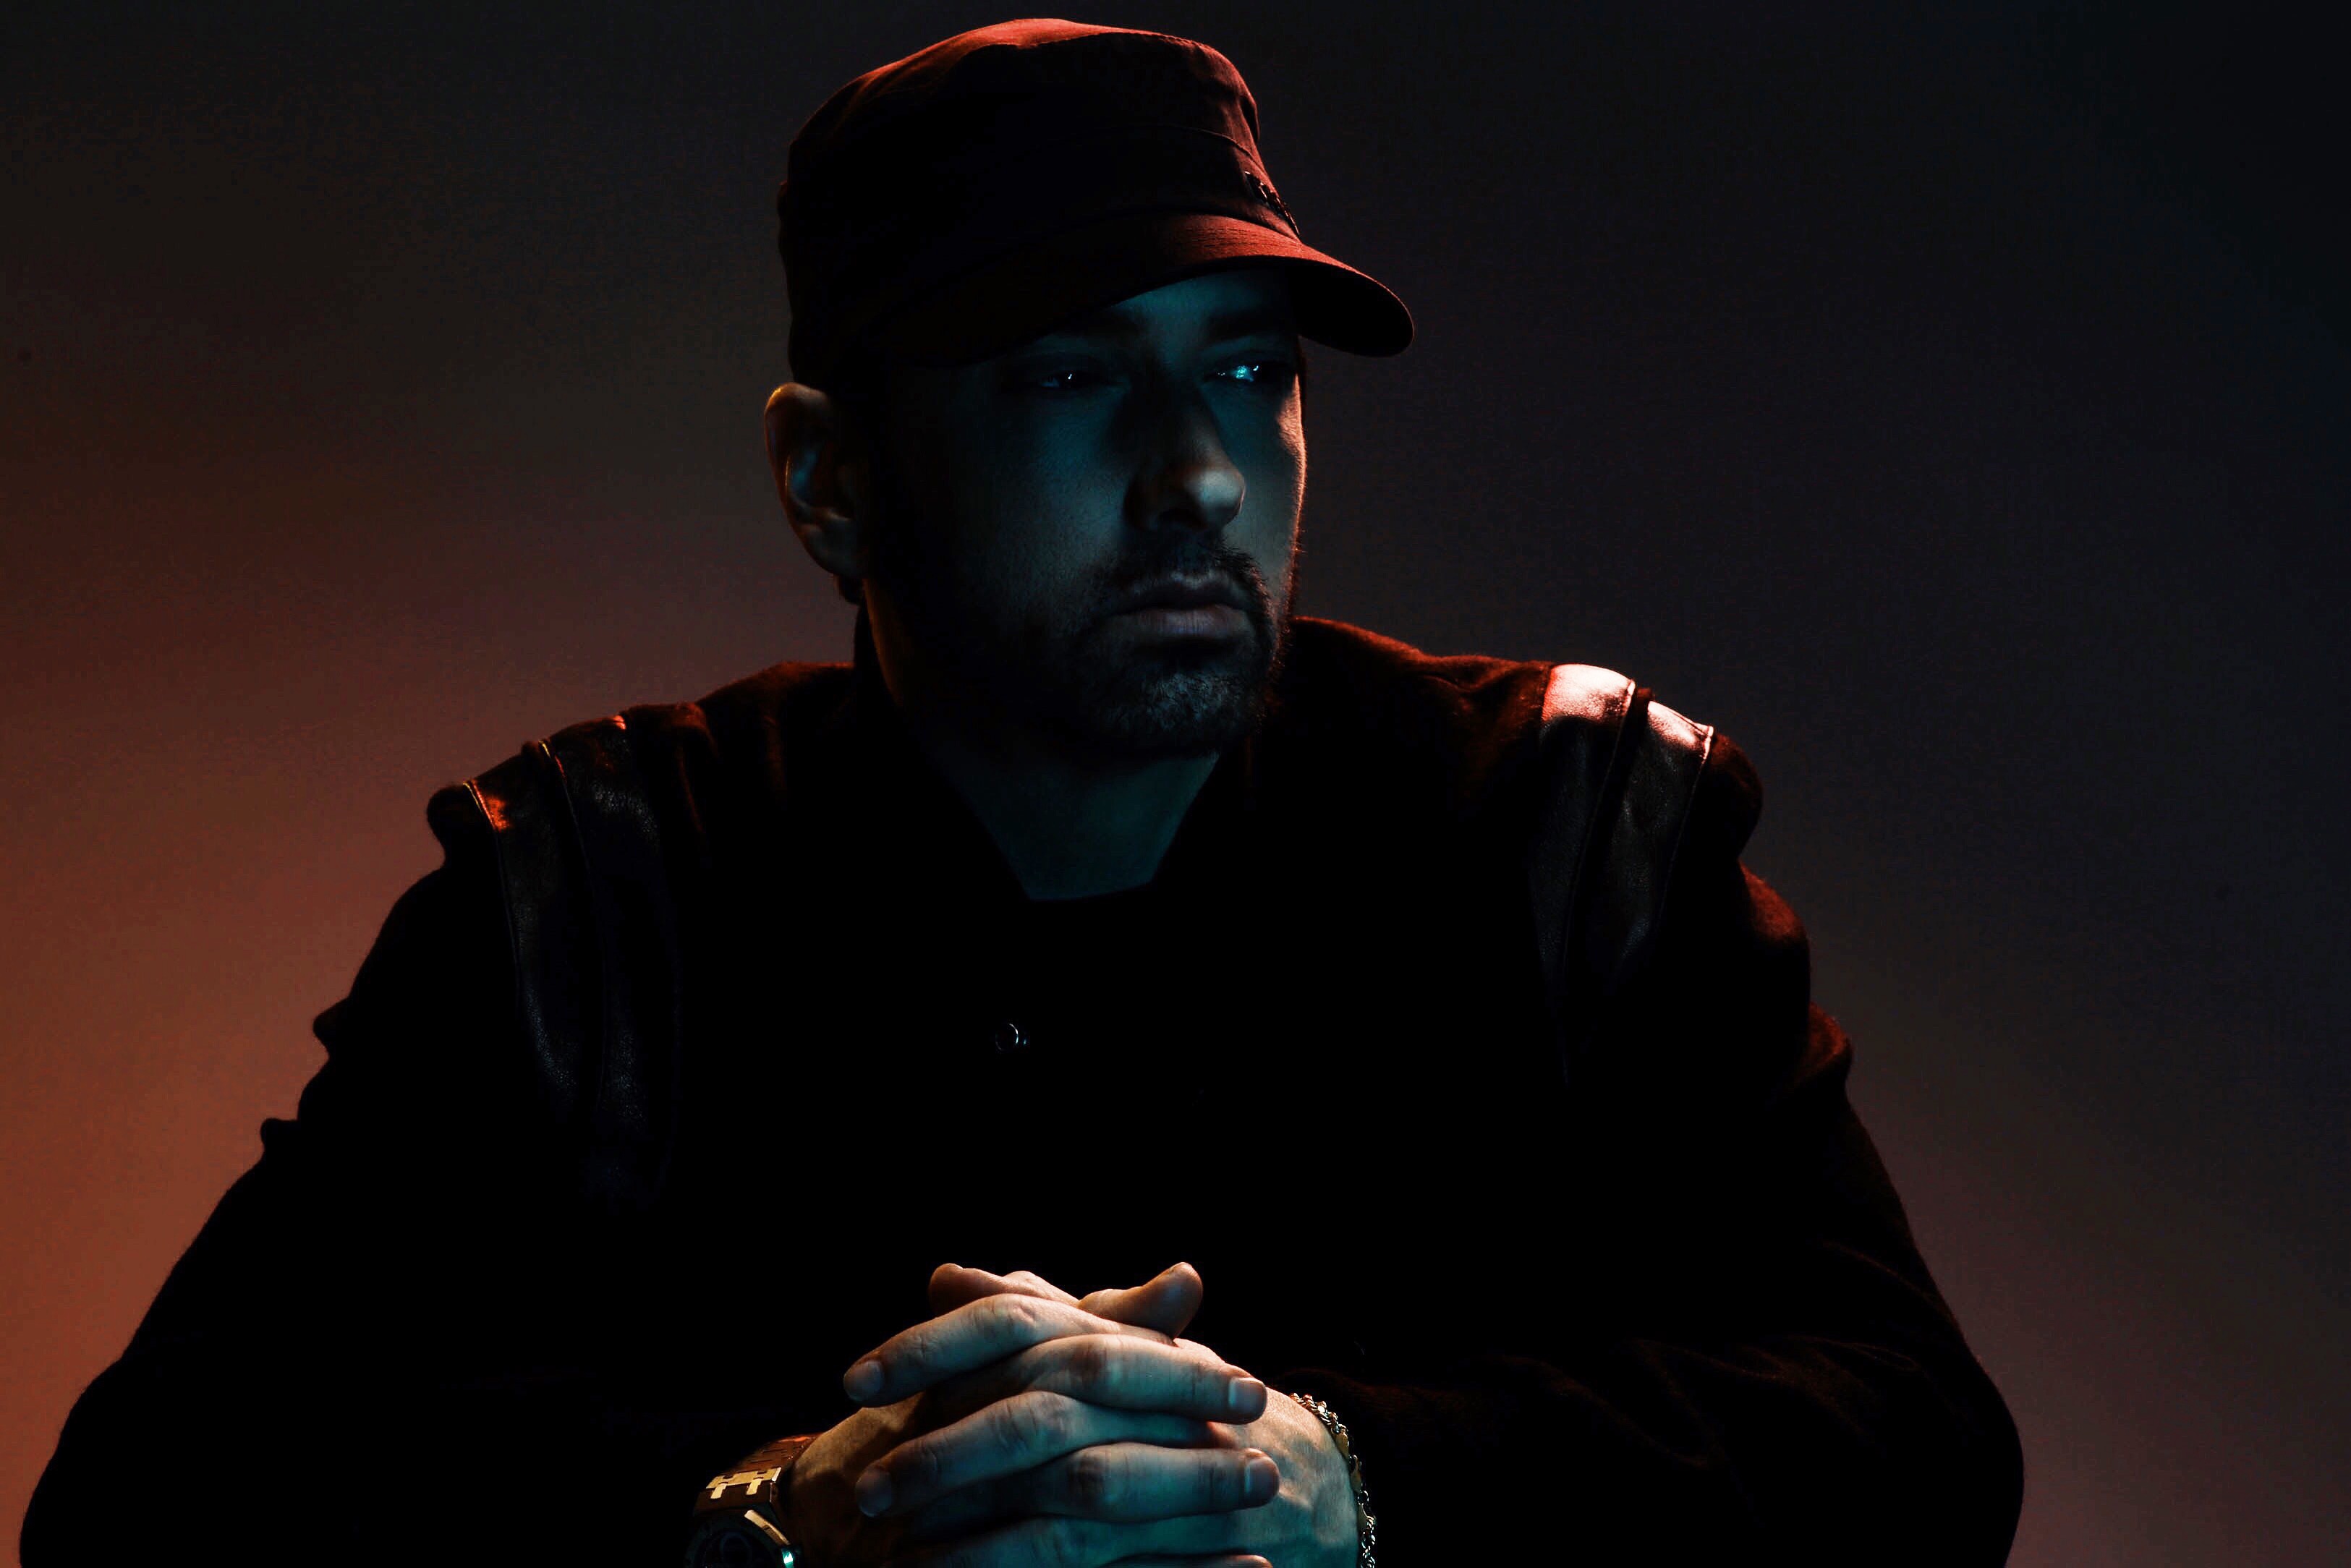 Eminem 4k 2018, HD Music, 4k Wallpapers, Images, Backgrounds, Photos